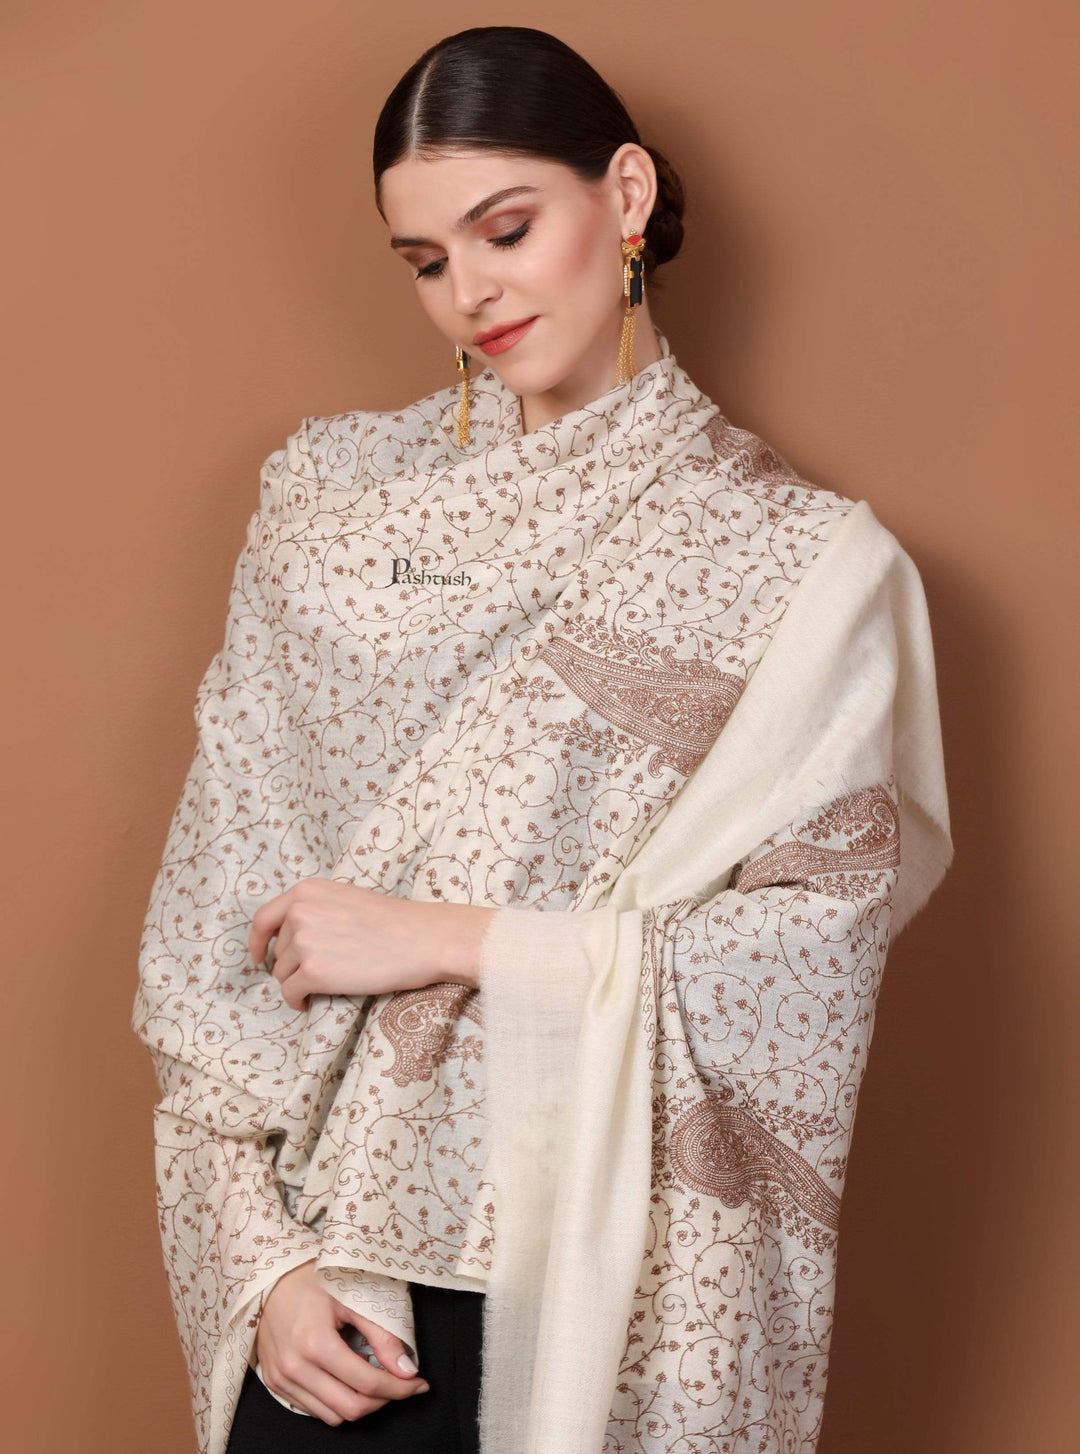 Pashtush Shawl Store Shawl Pashtush Womens Shawl with Tone on Tone Embroidery, Soft Warm, Light Weight Wool